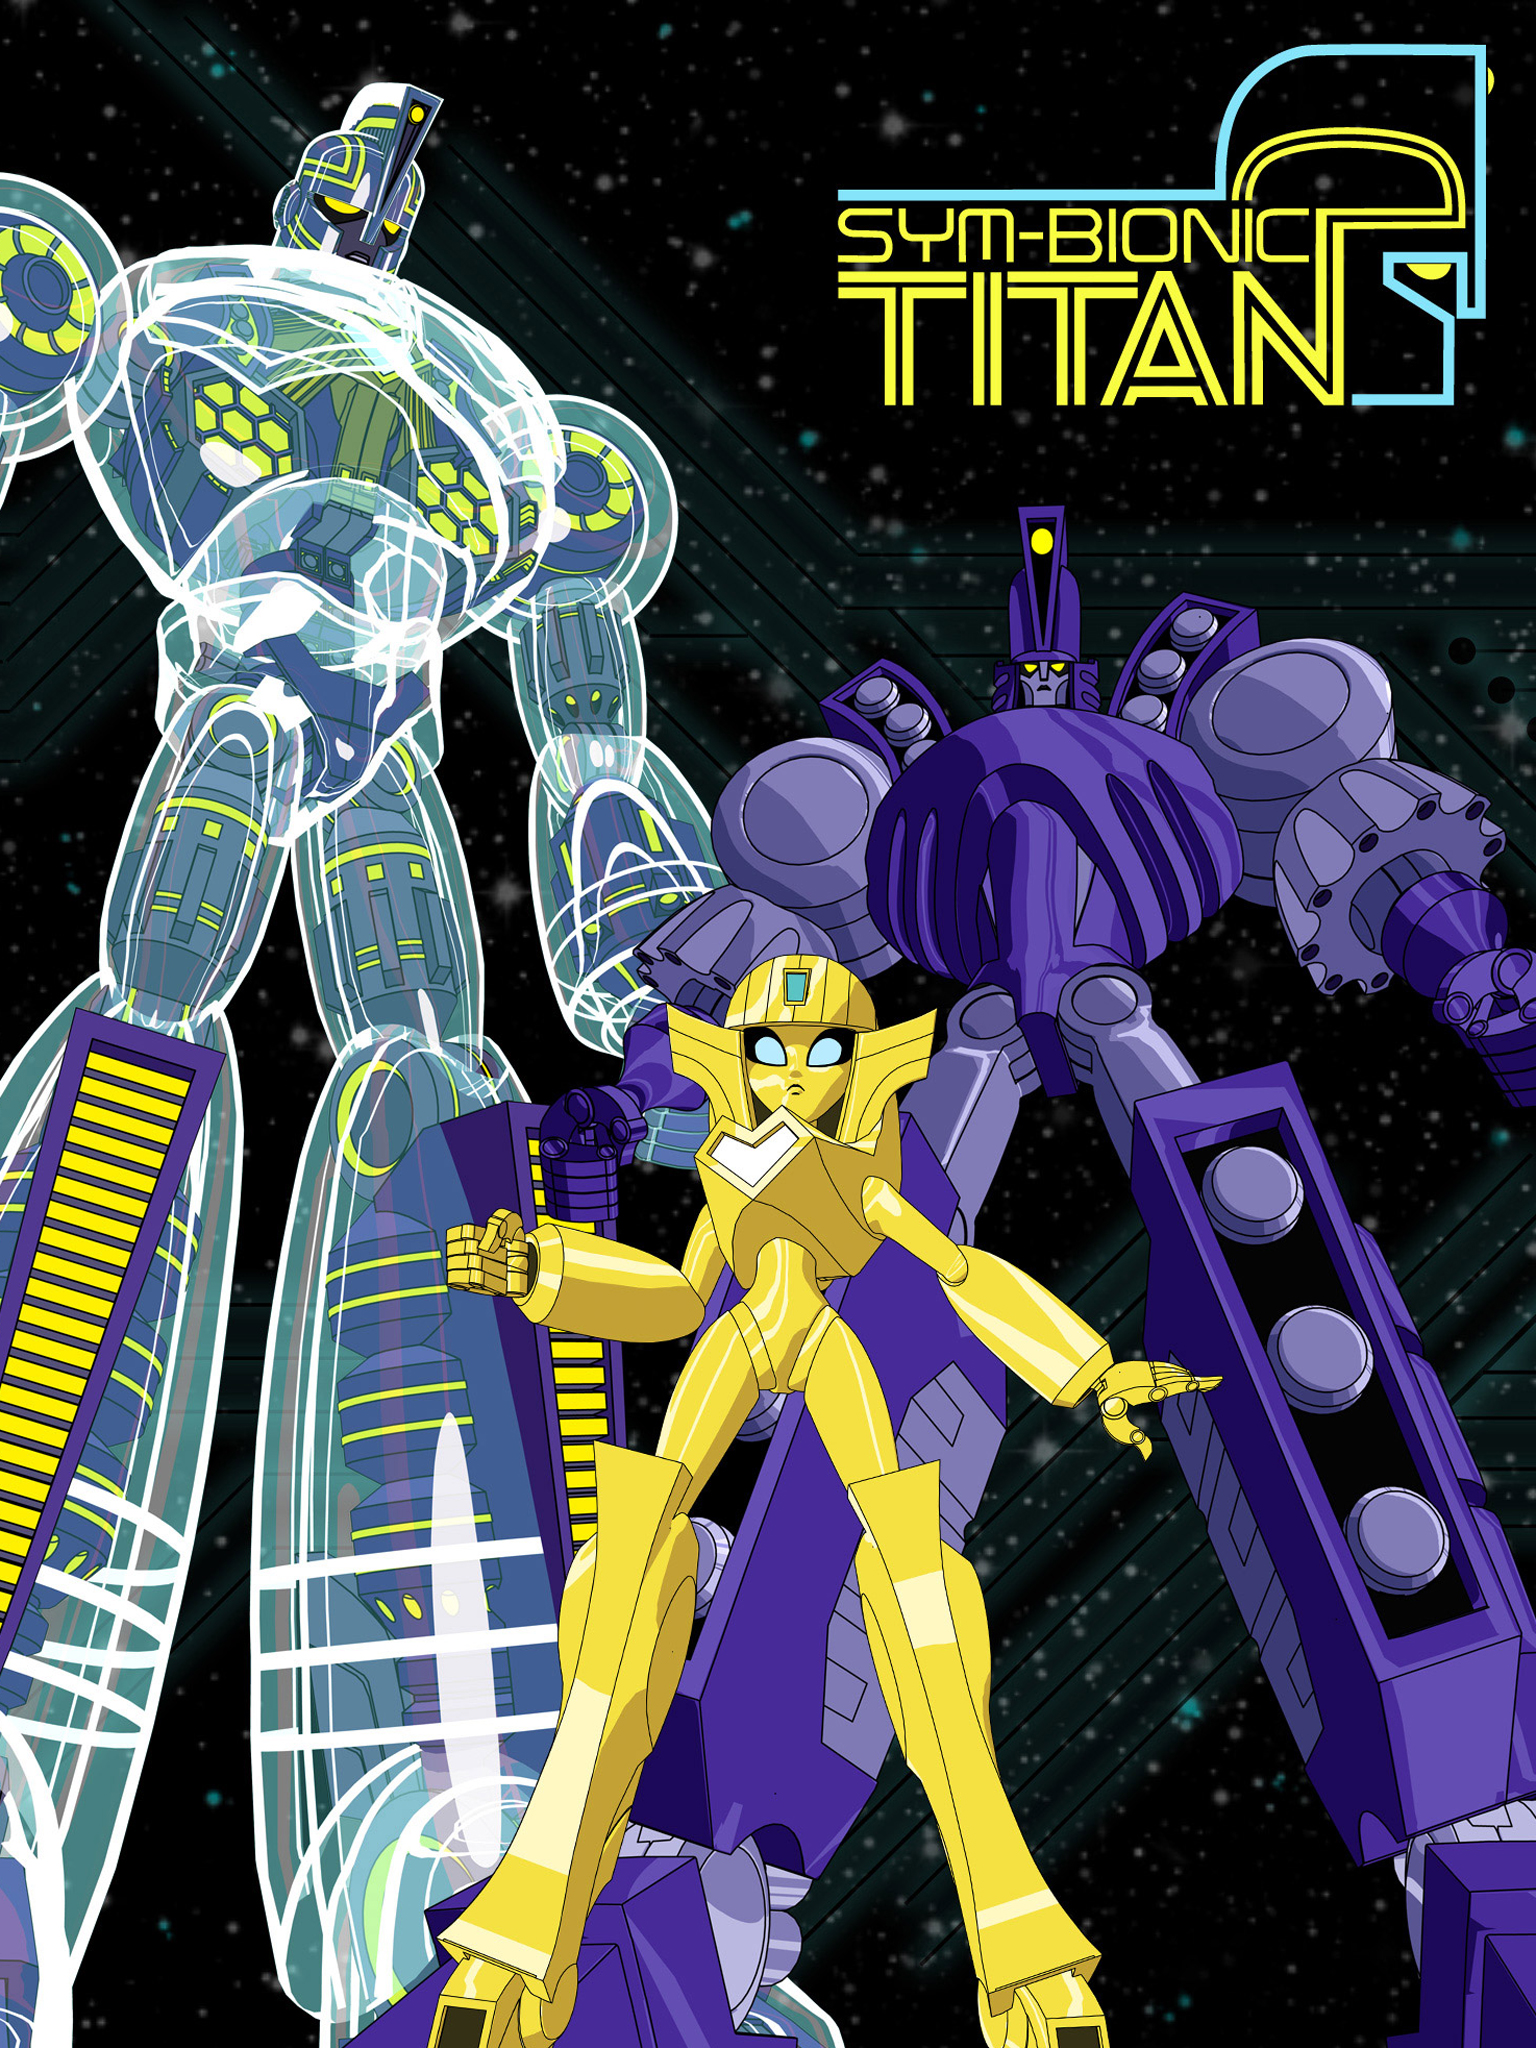 Sym-Bionic Titan.